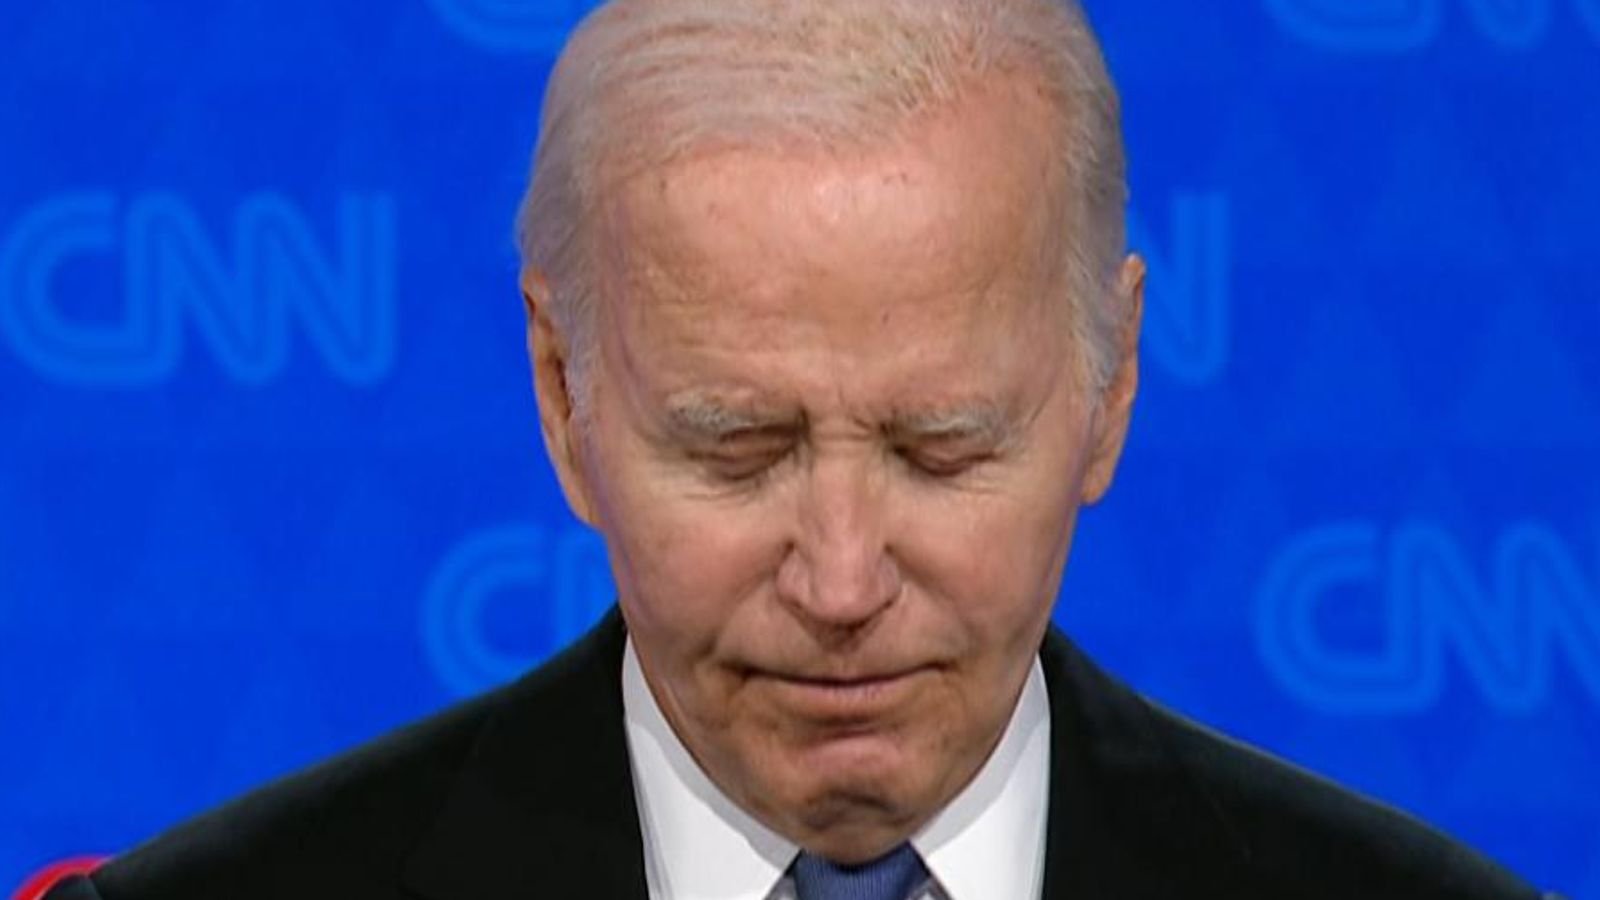 Joe Biden admits he 'nearly fell asleep on stage' during disastrous Trump TV debate | US News